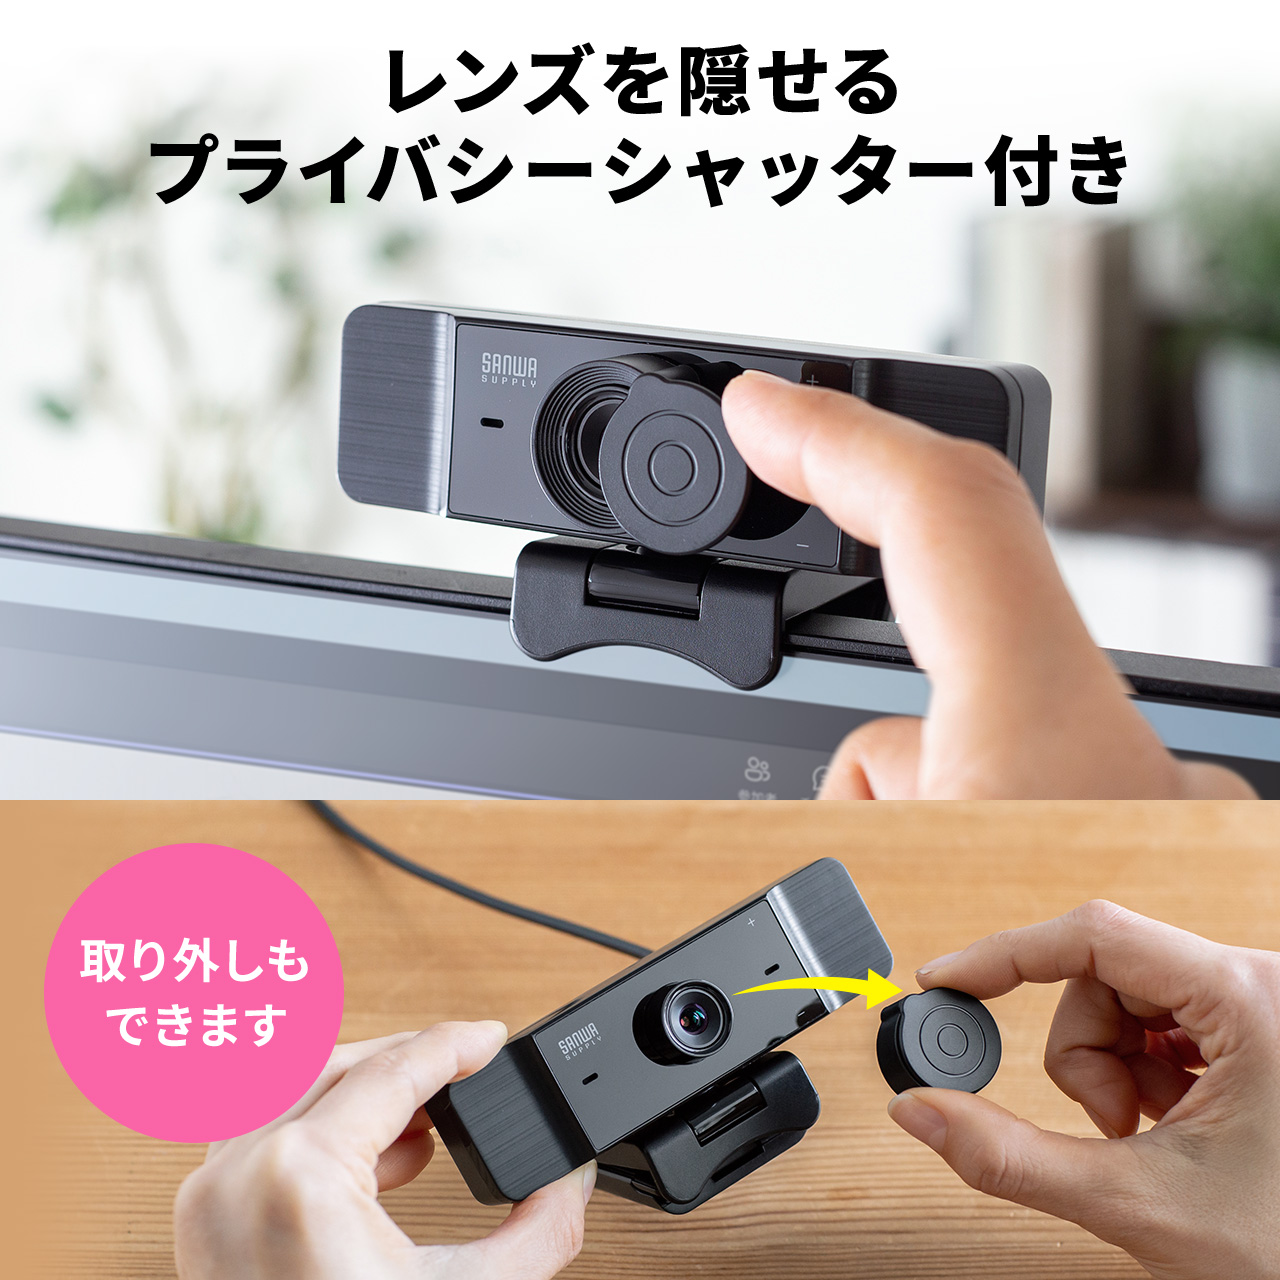 JETAKU Stream Webcam 200万画素 マイク内蔵